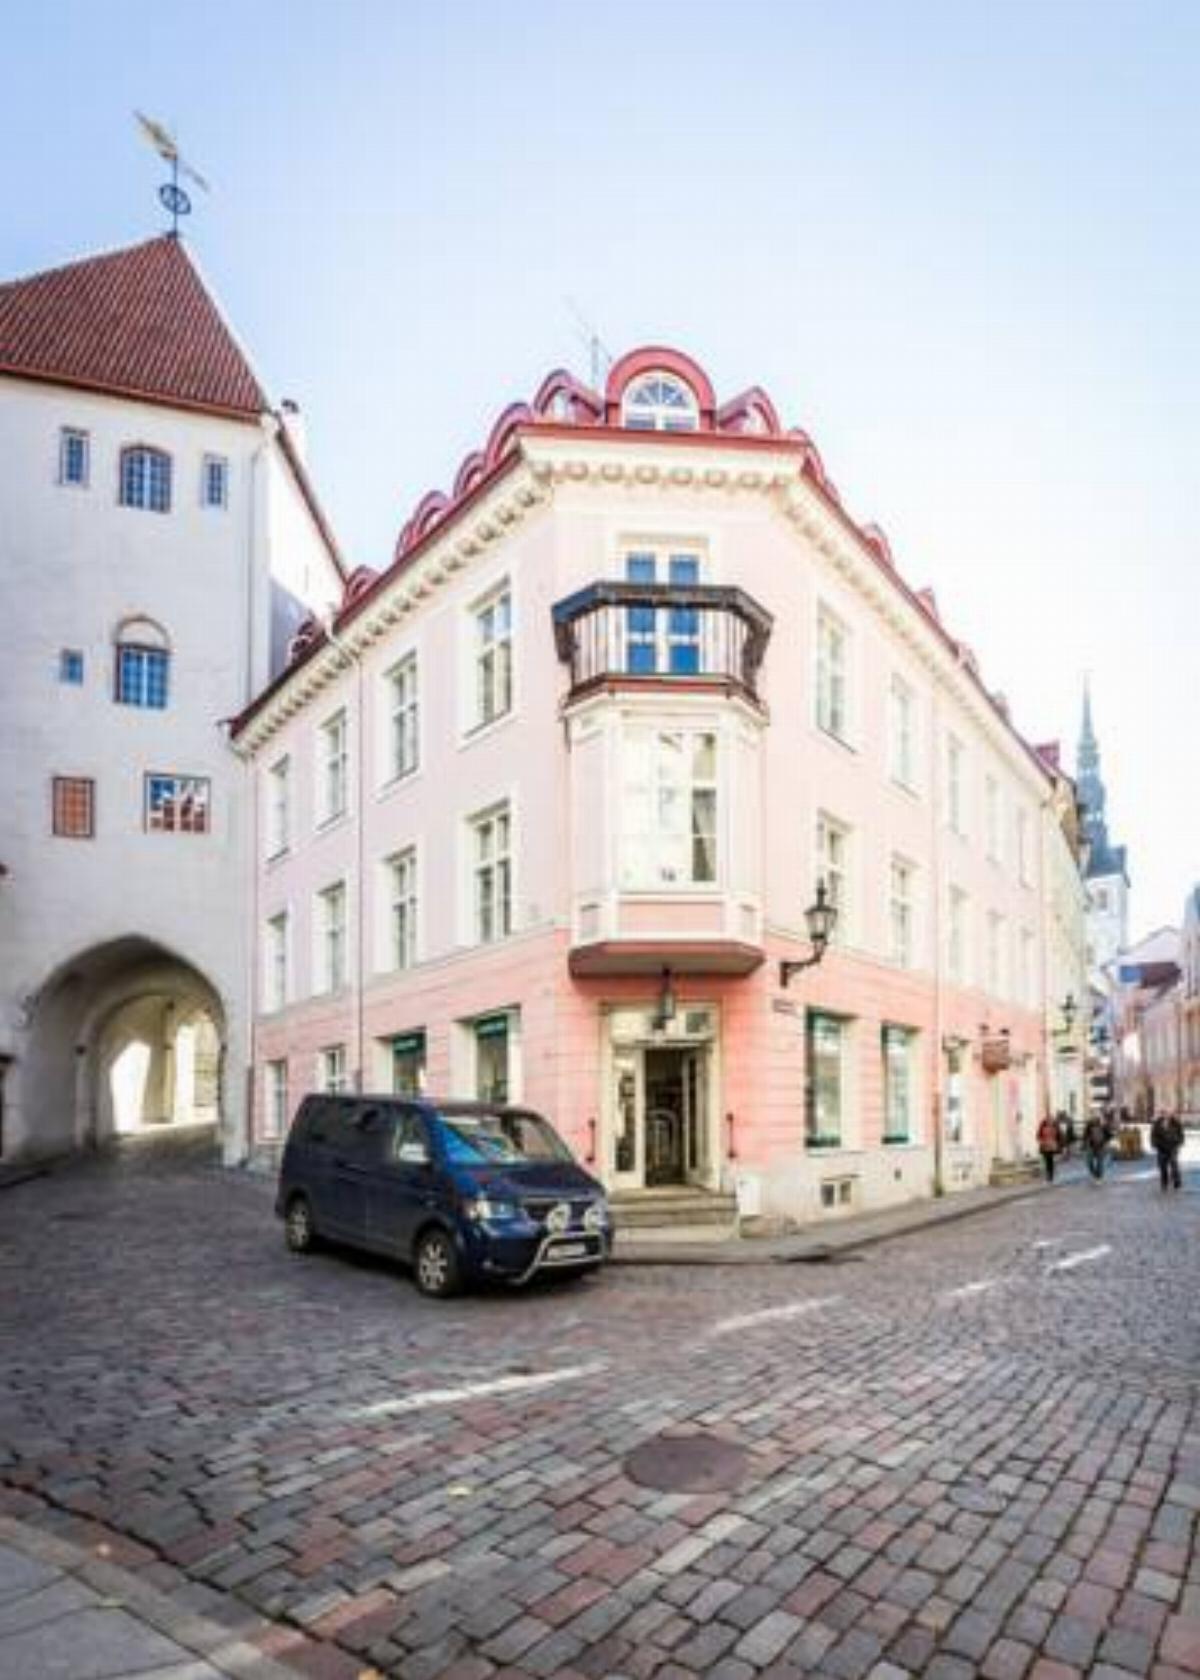 Casa de Verano Old Town Hotel Tallinn Estonia